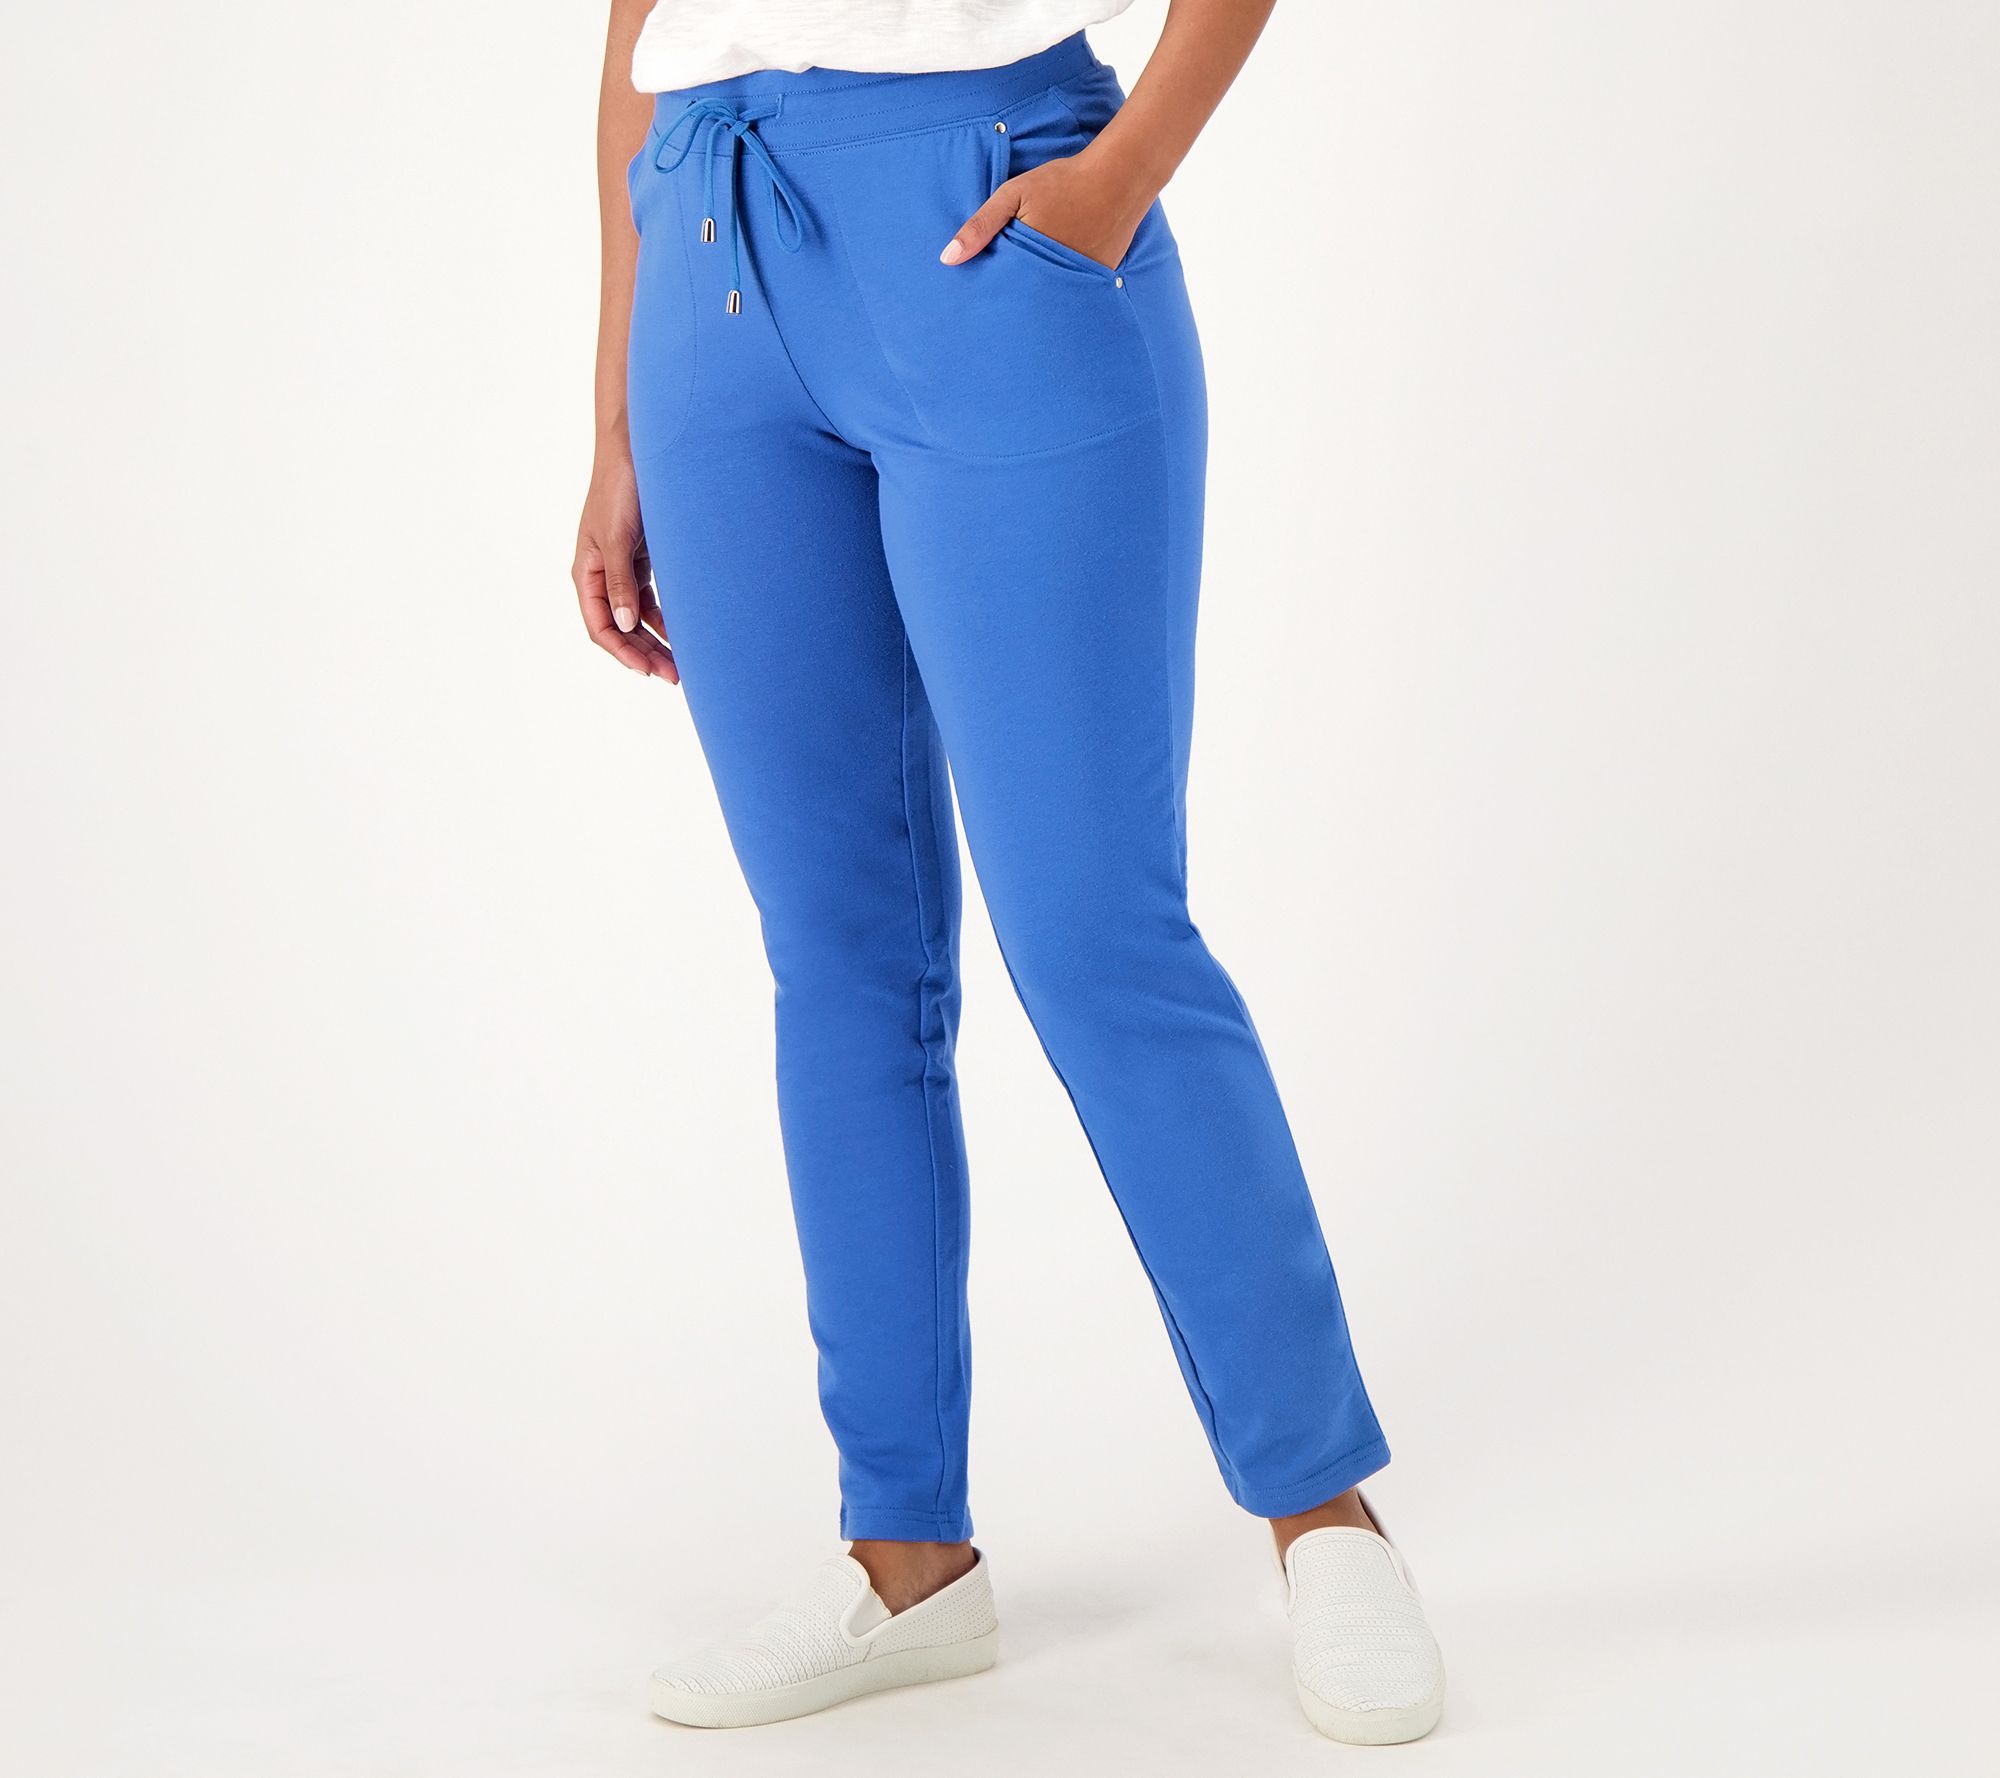 Mrat Full Length Pants Women's Fit Trouser Ladies New Printing Yoga Wear  Sports Yoga Long Pants Slim Fit Casual Pants 